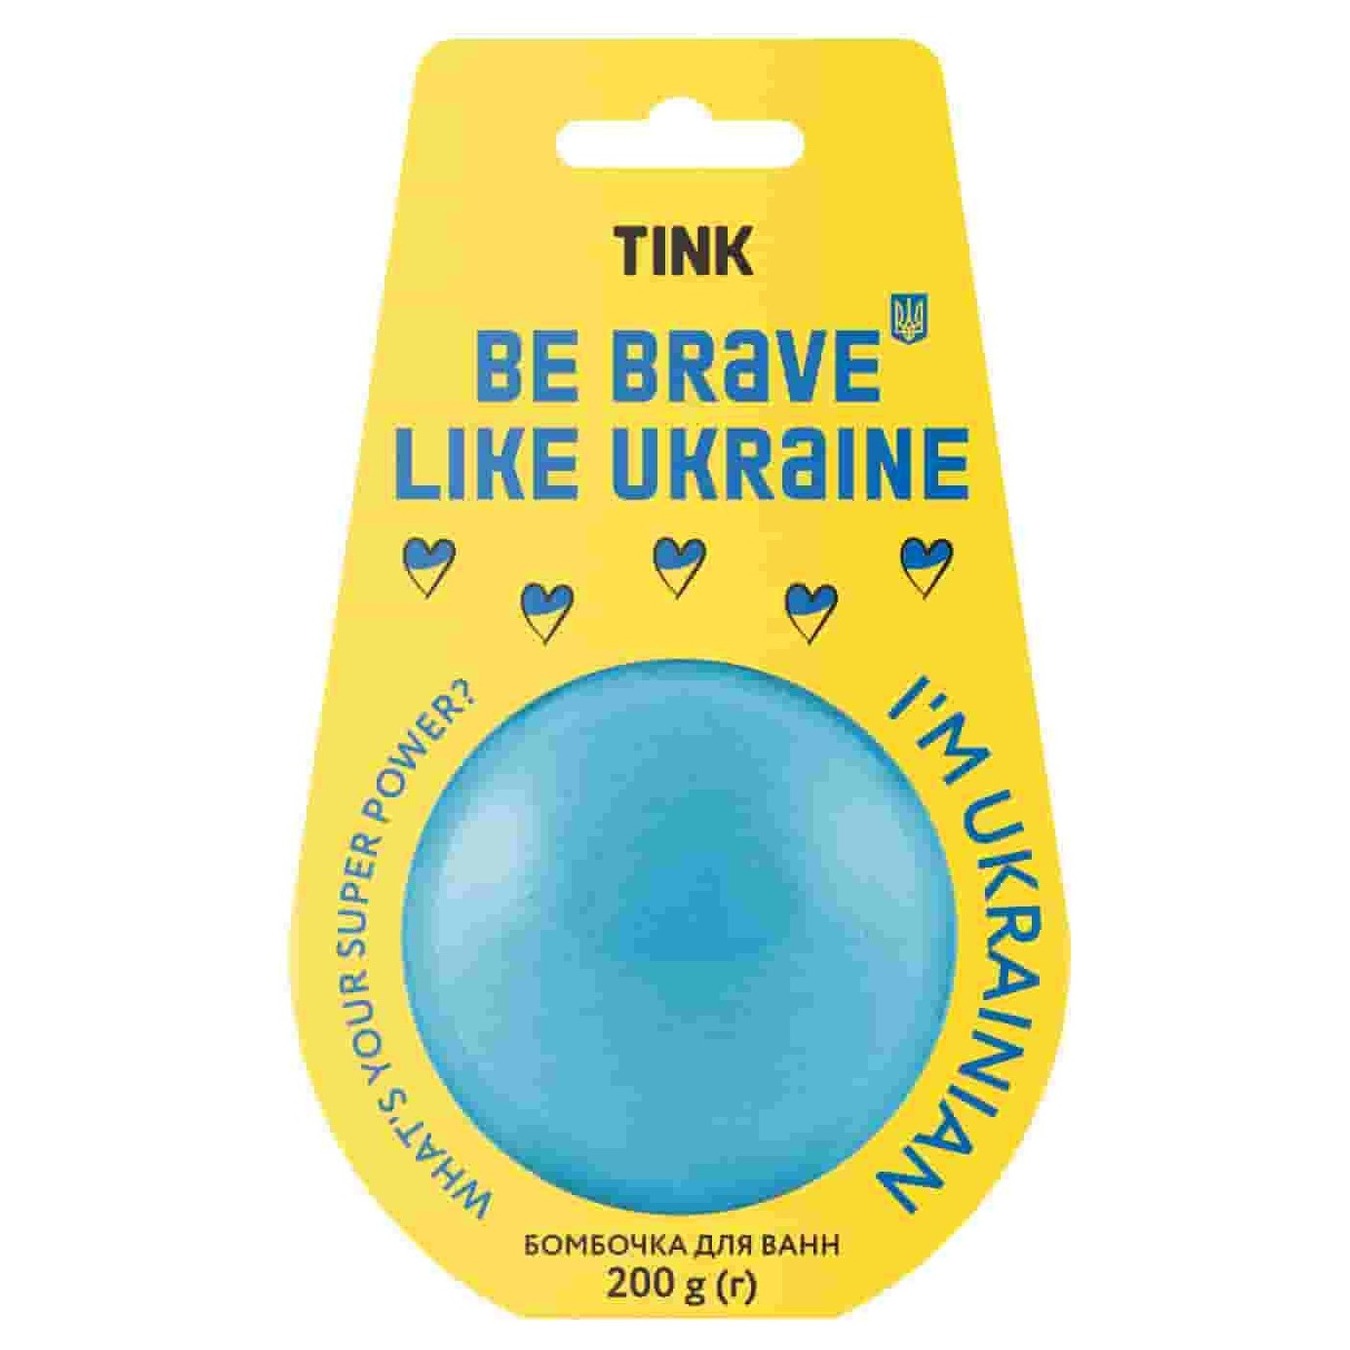 Tink be brave like Ukraine geyser bomb for baths 200g